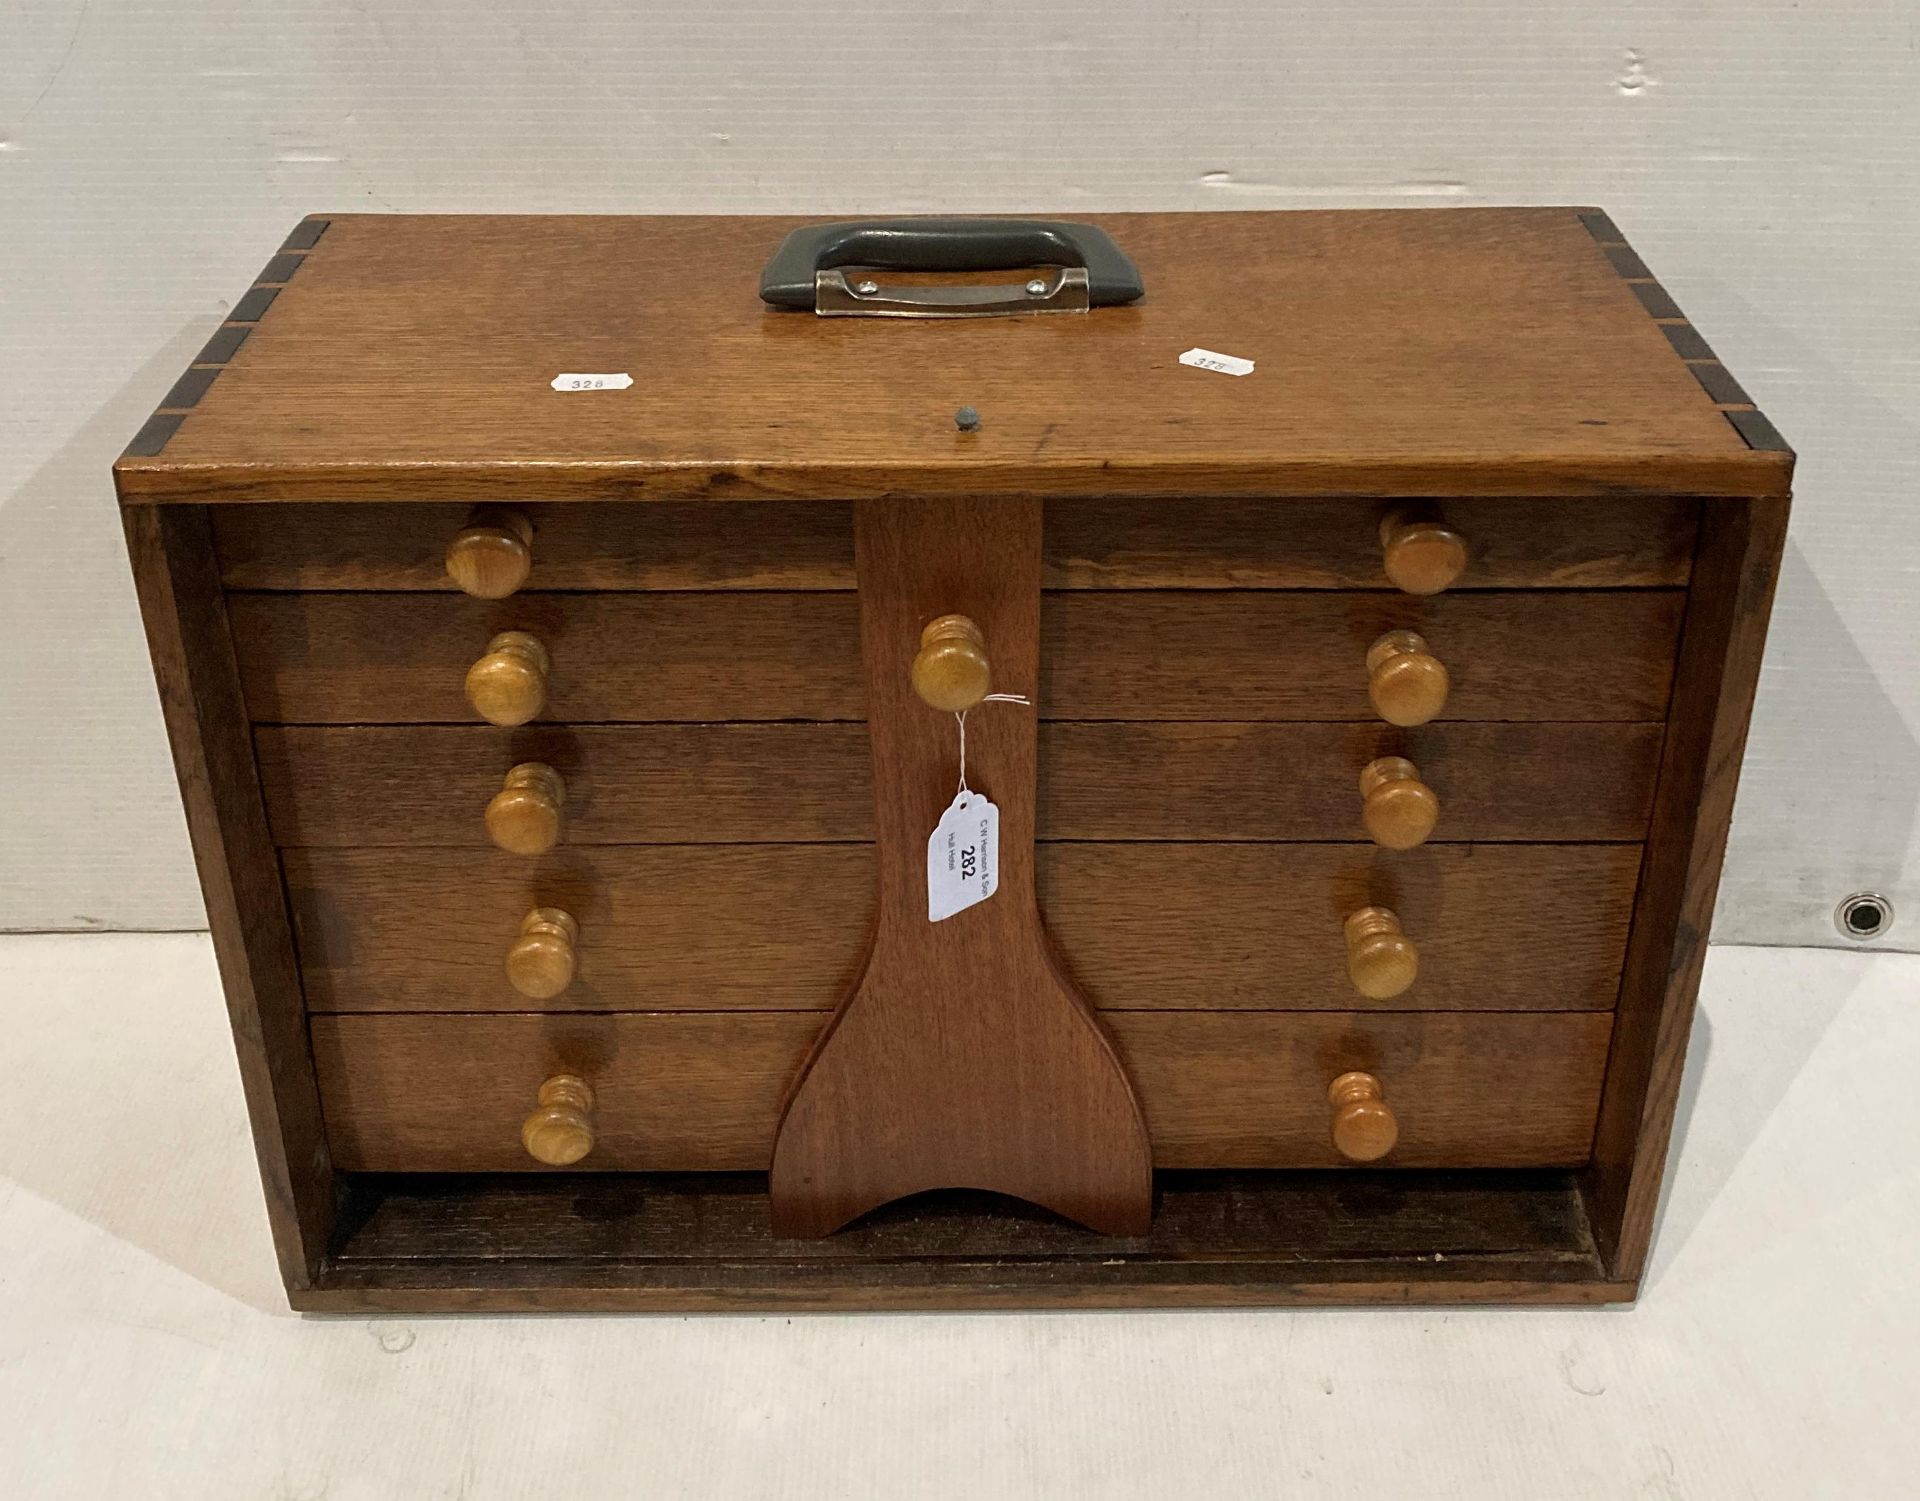 An oak 5 drawer engineers' cabinet - missing front panel (saleroom location: S3 ENT) - Image 2 of 2